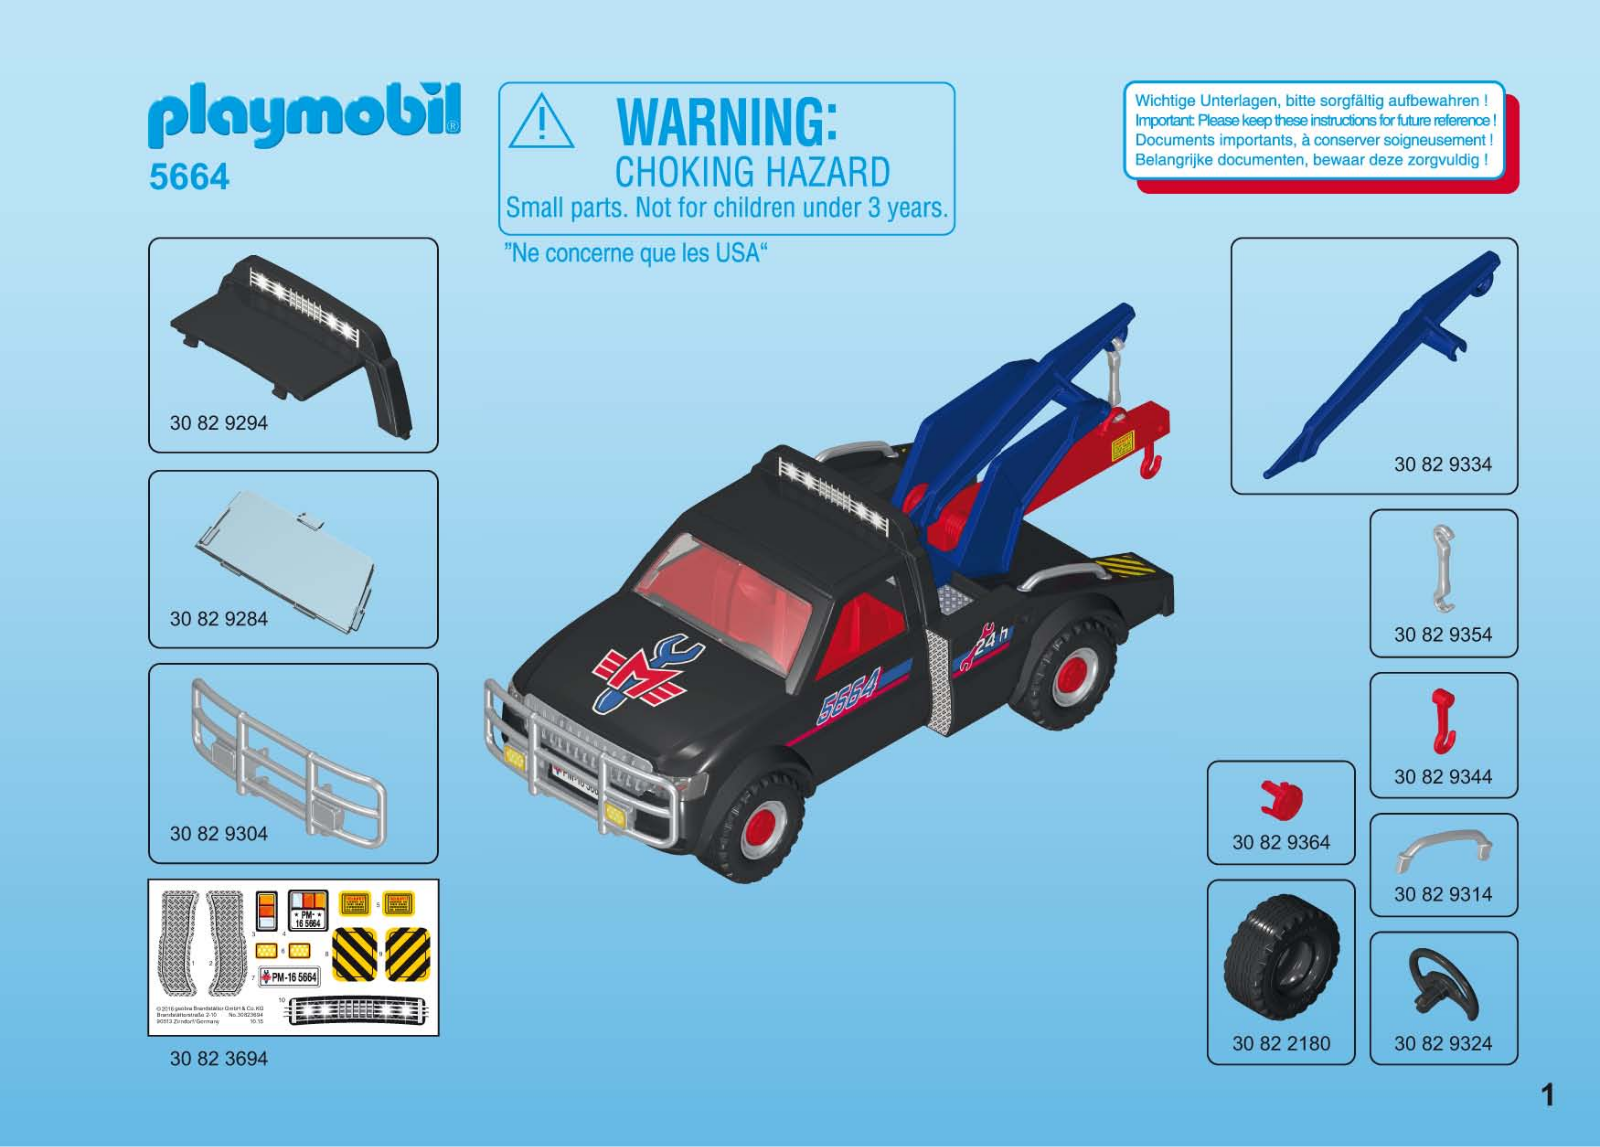 Playmobil 5664 Instructions